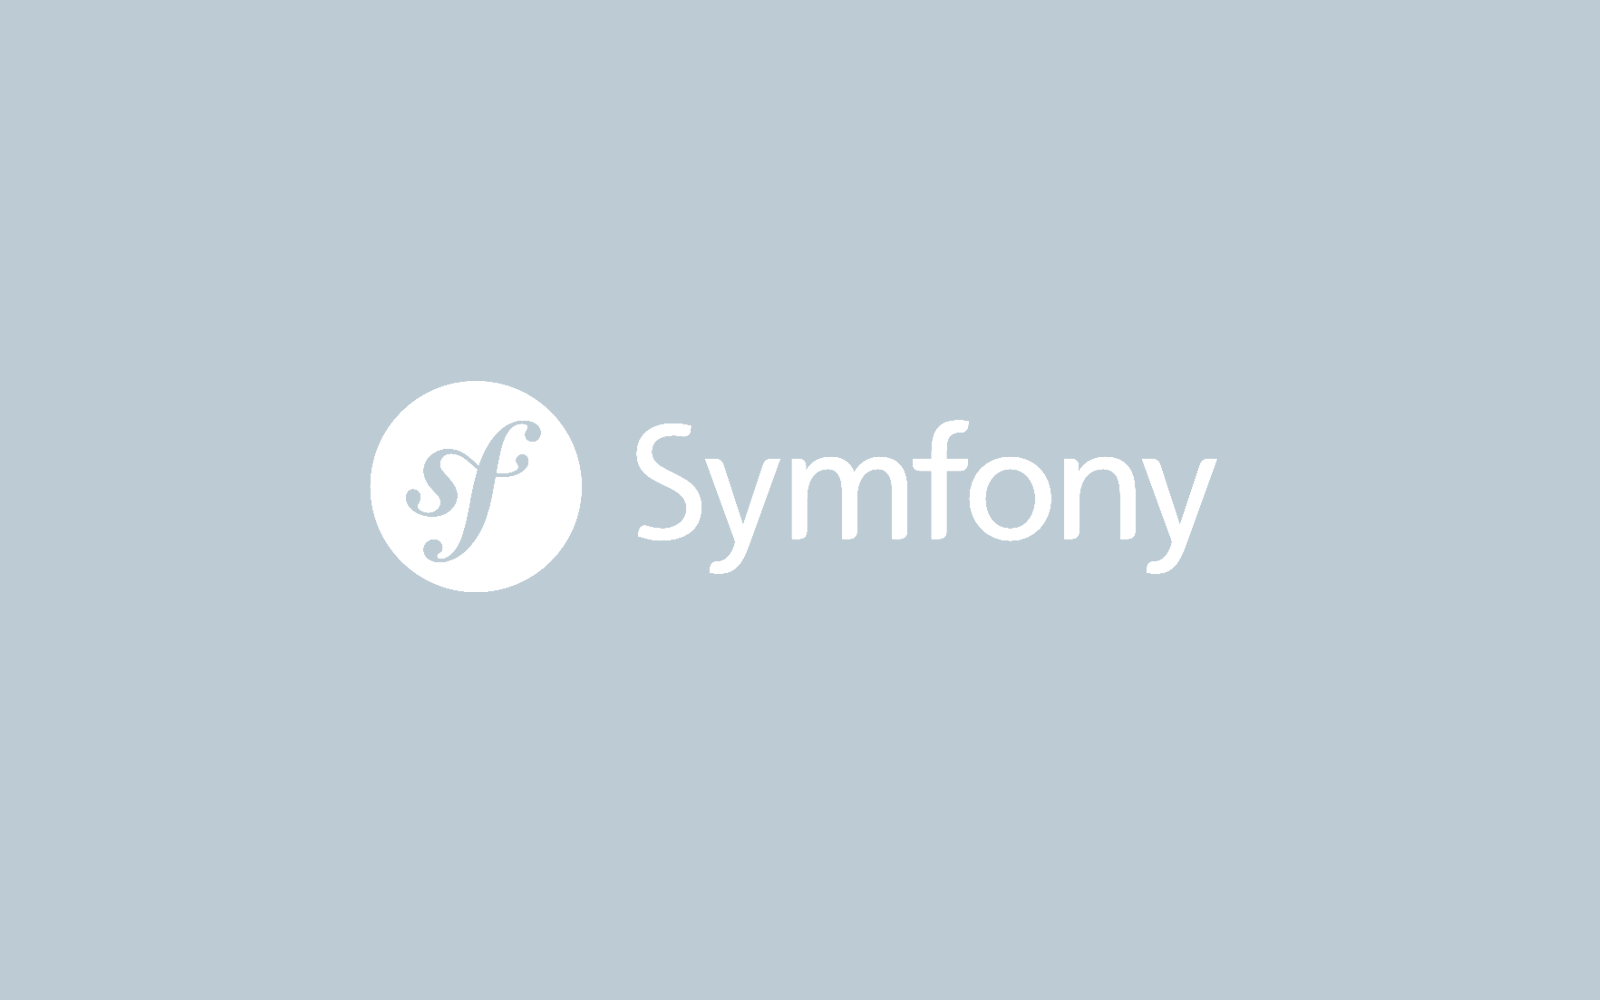 Symfony messenger. Логотип Symfony. Хабр логотип. Symfony Johnson. Symfony background.